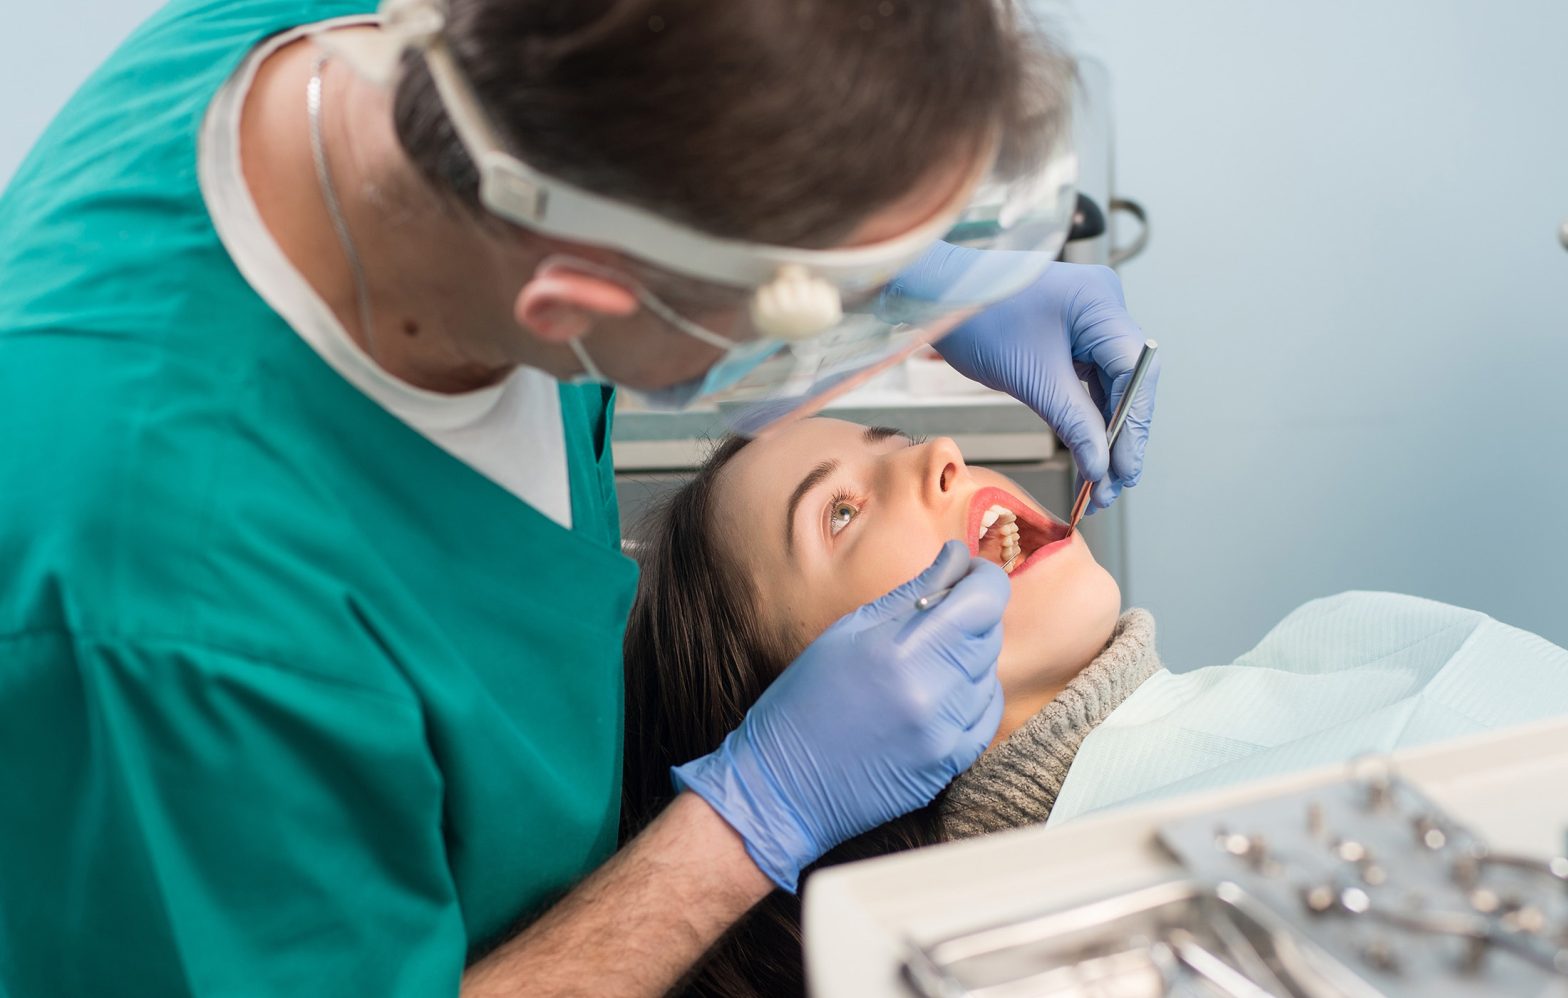 teeth whitening treatment in georgia